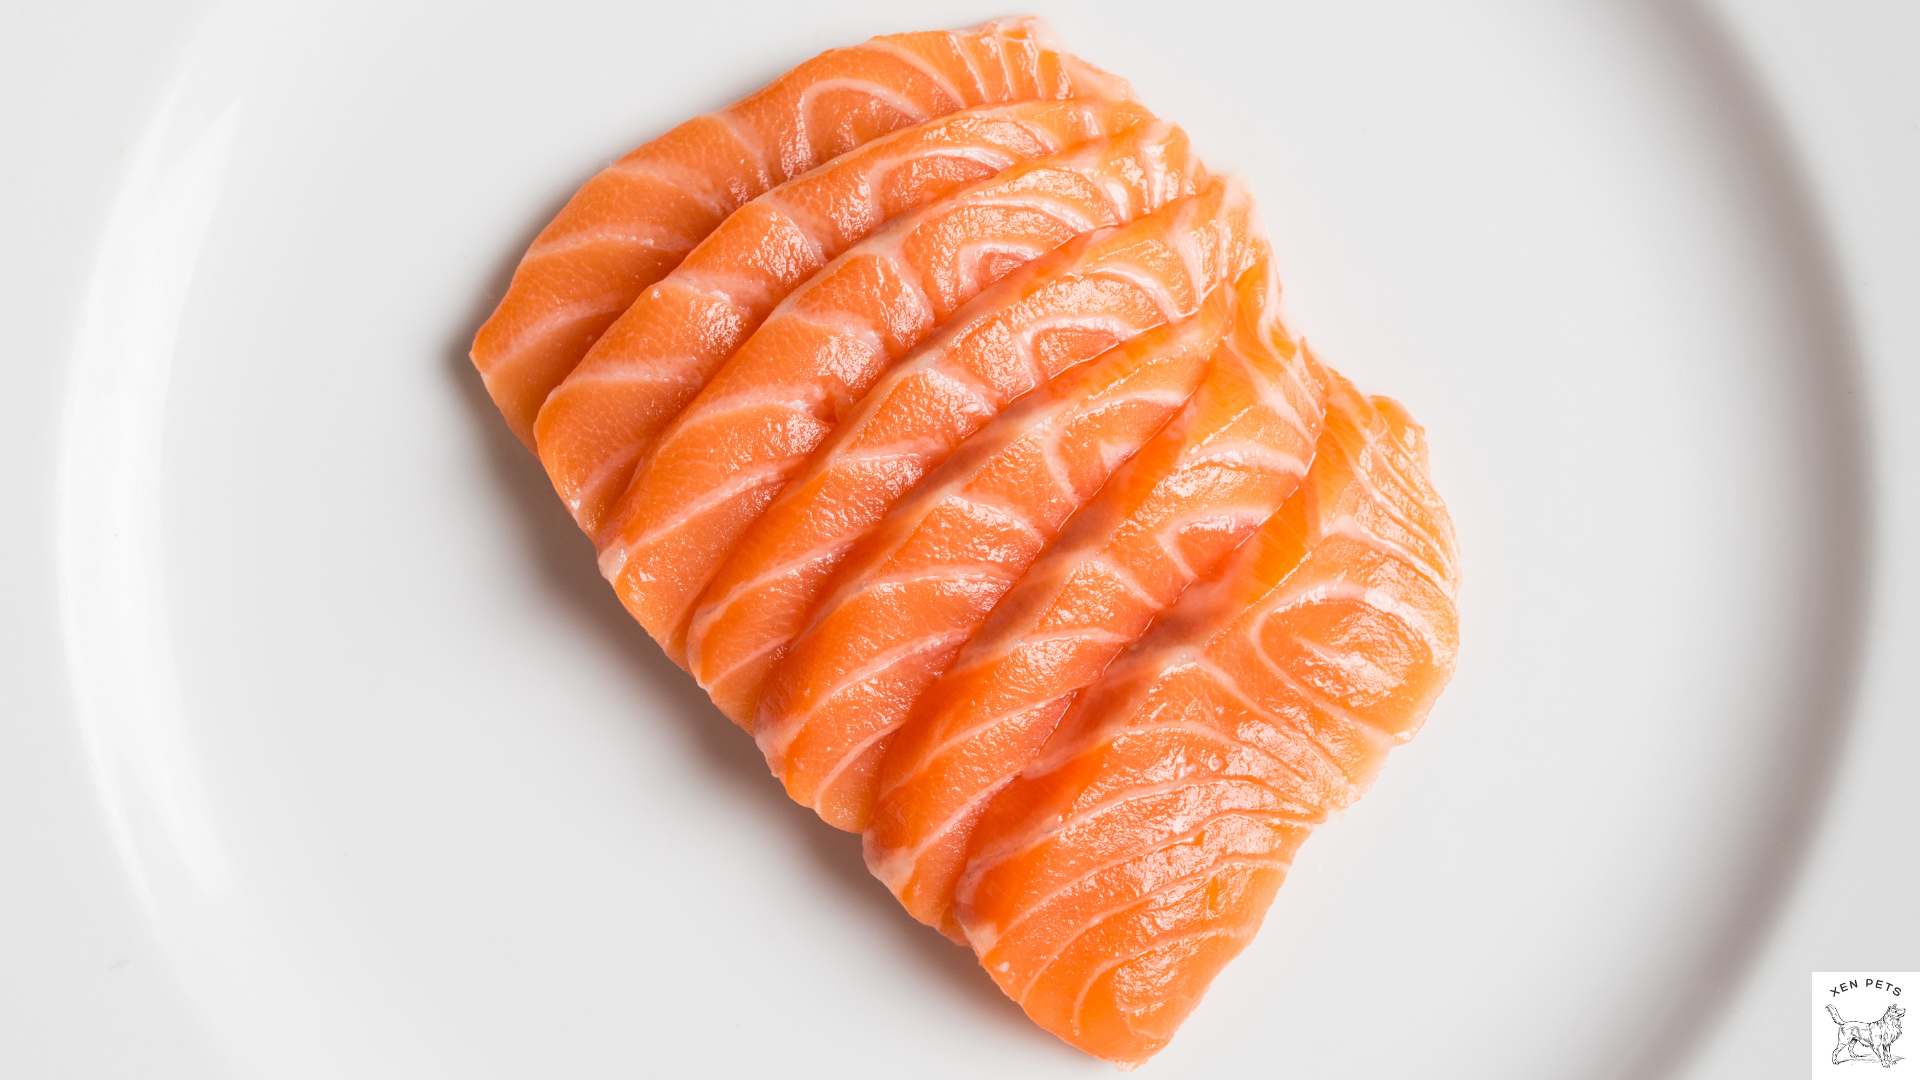 salmon contains omega fatty acids